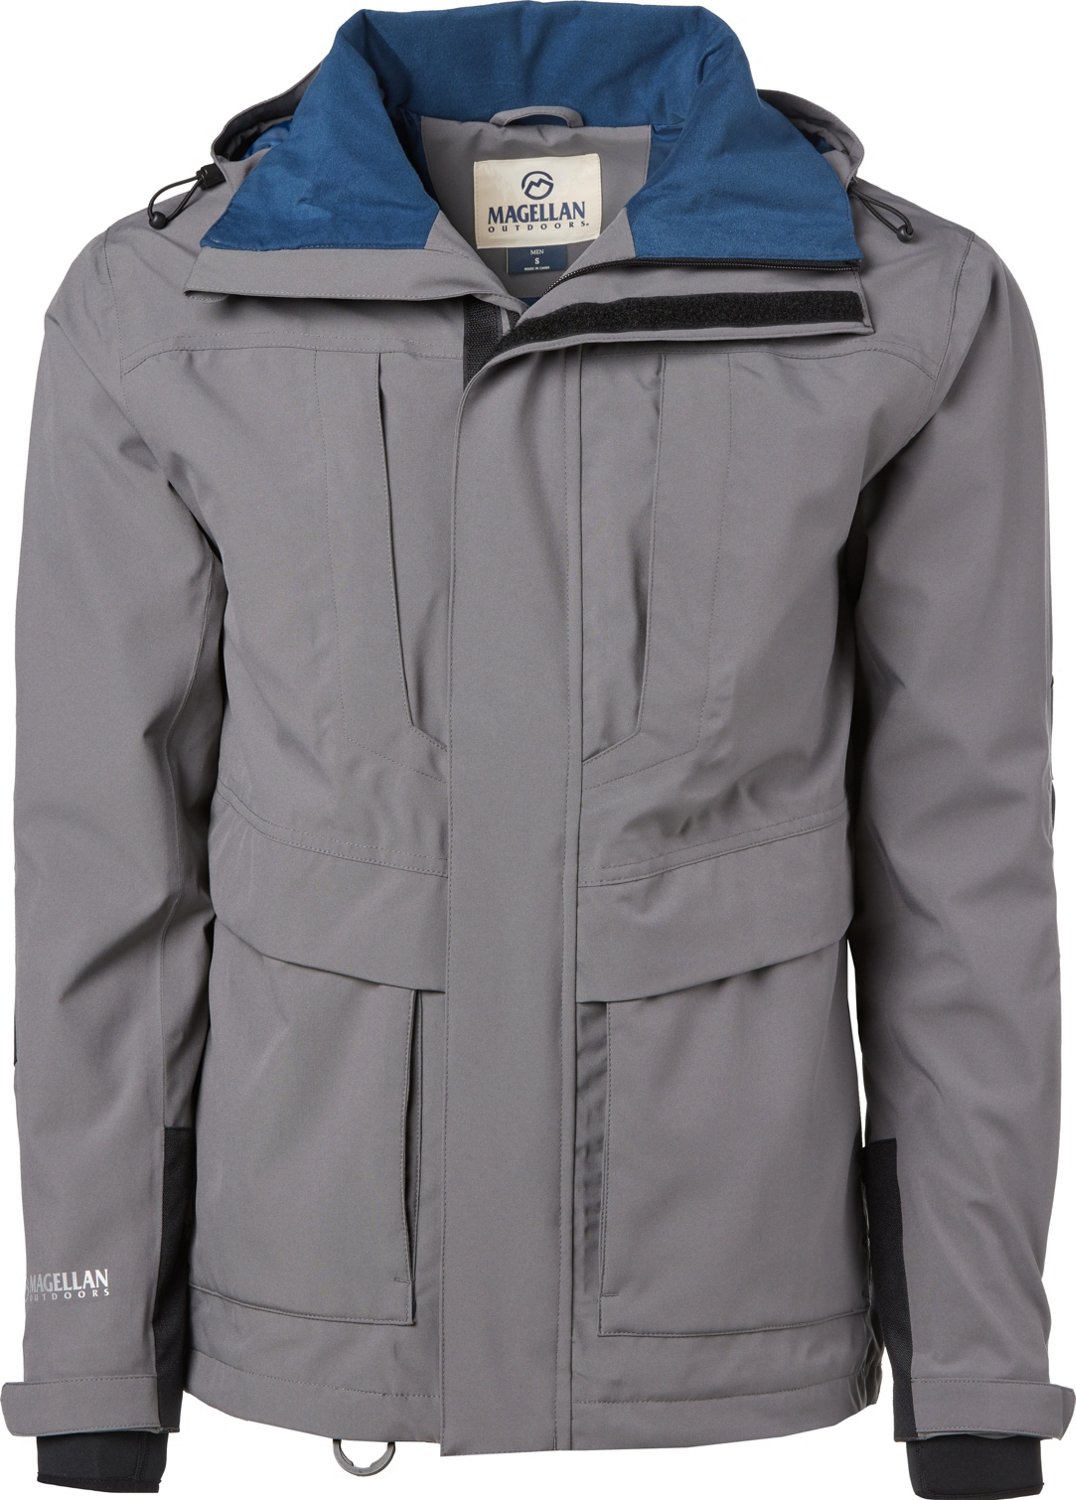 Magellan Outdoors, Jackets & Coats